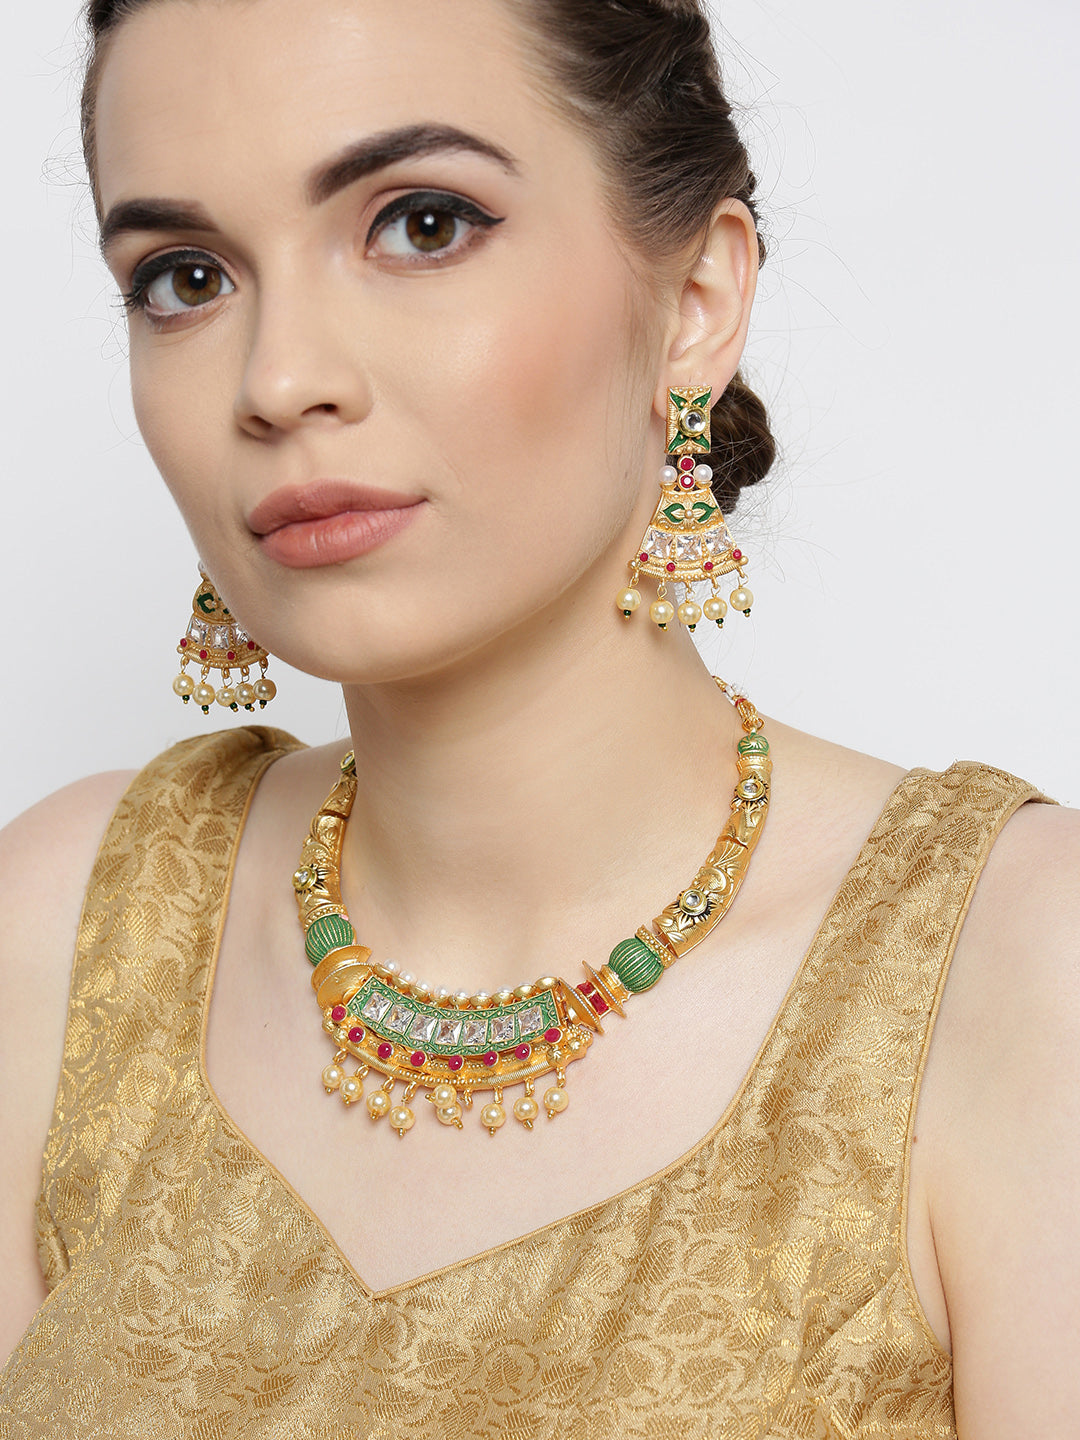 Ruby Pearls Stones Gold Plated Meenakari Jewellery Set